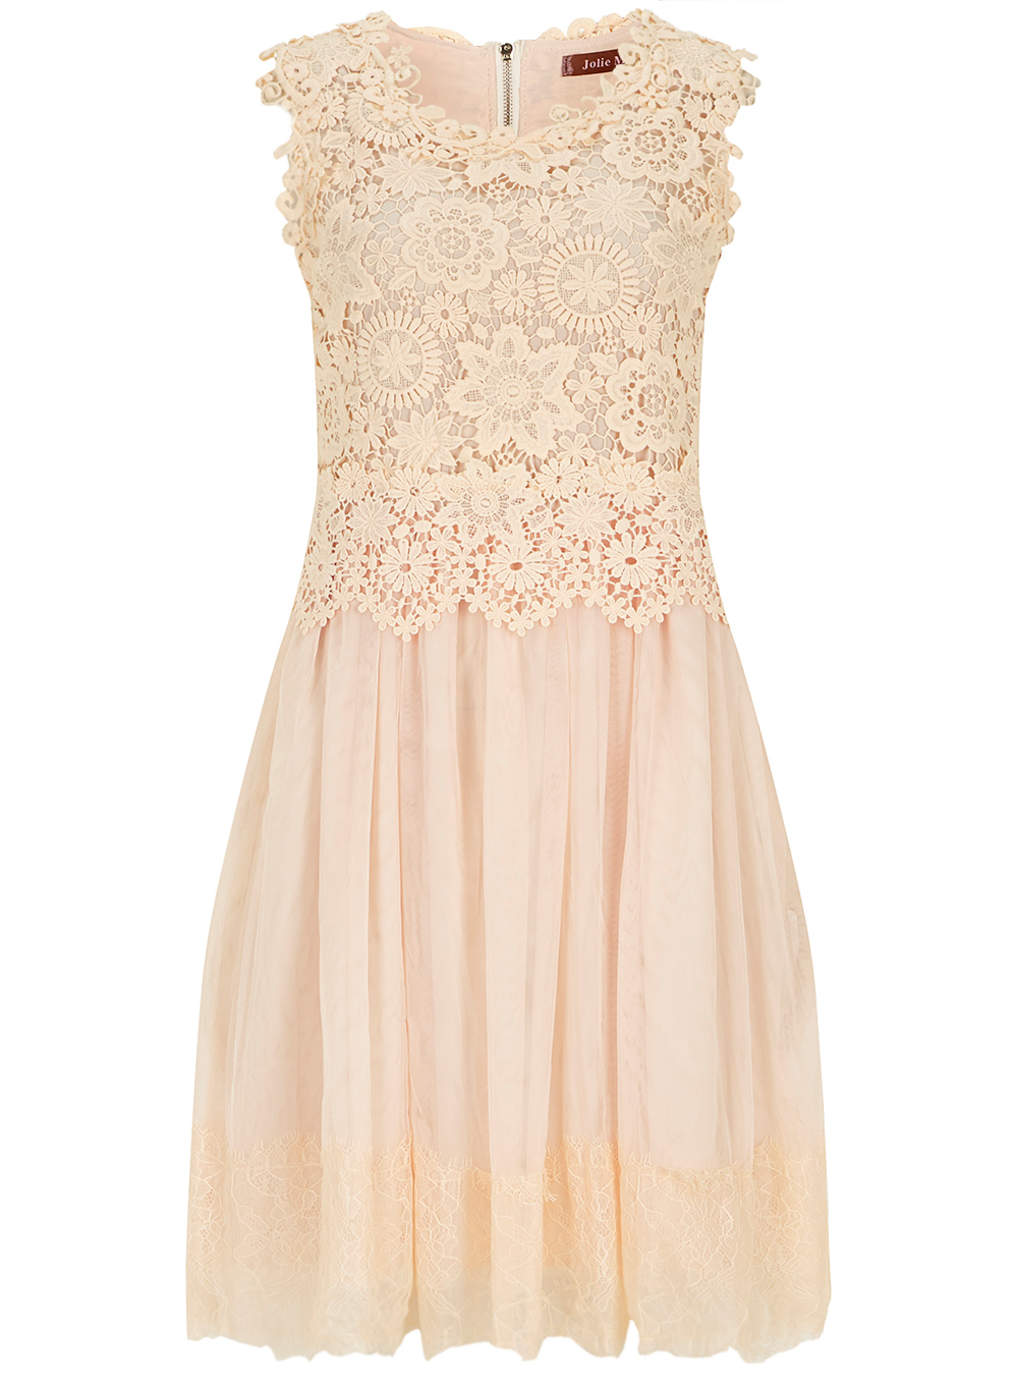 Unbranded Beige Crochet Lace Prom Dress 61410201